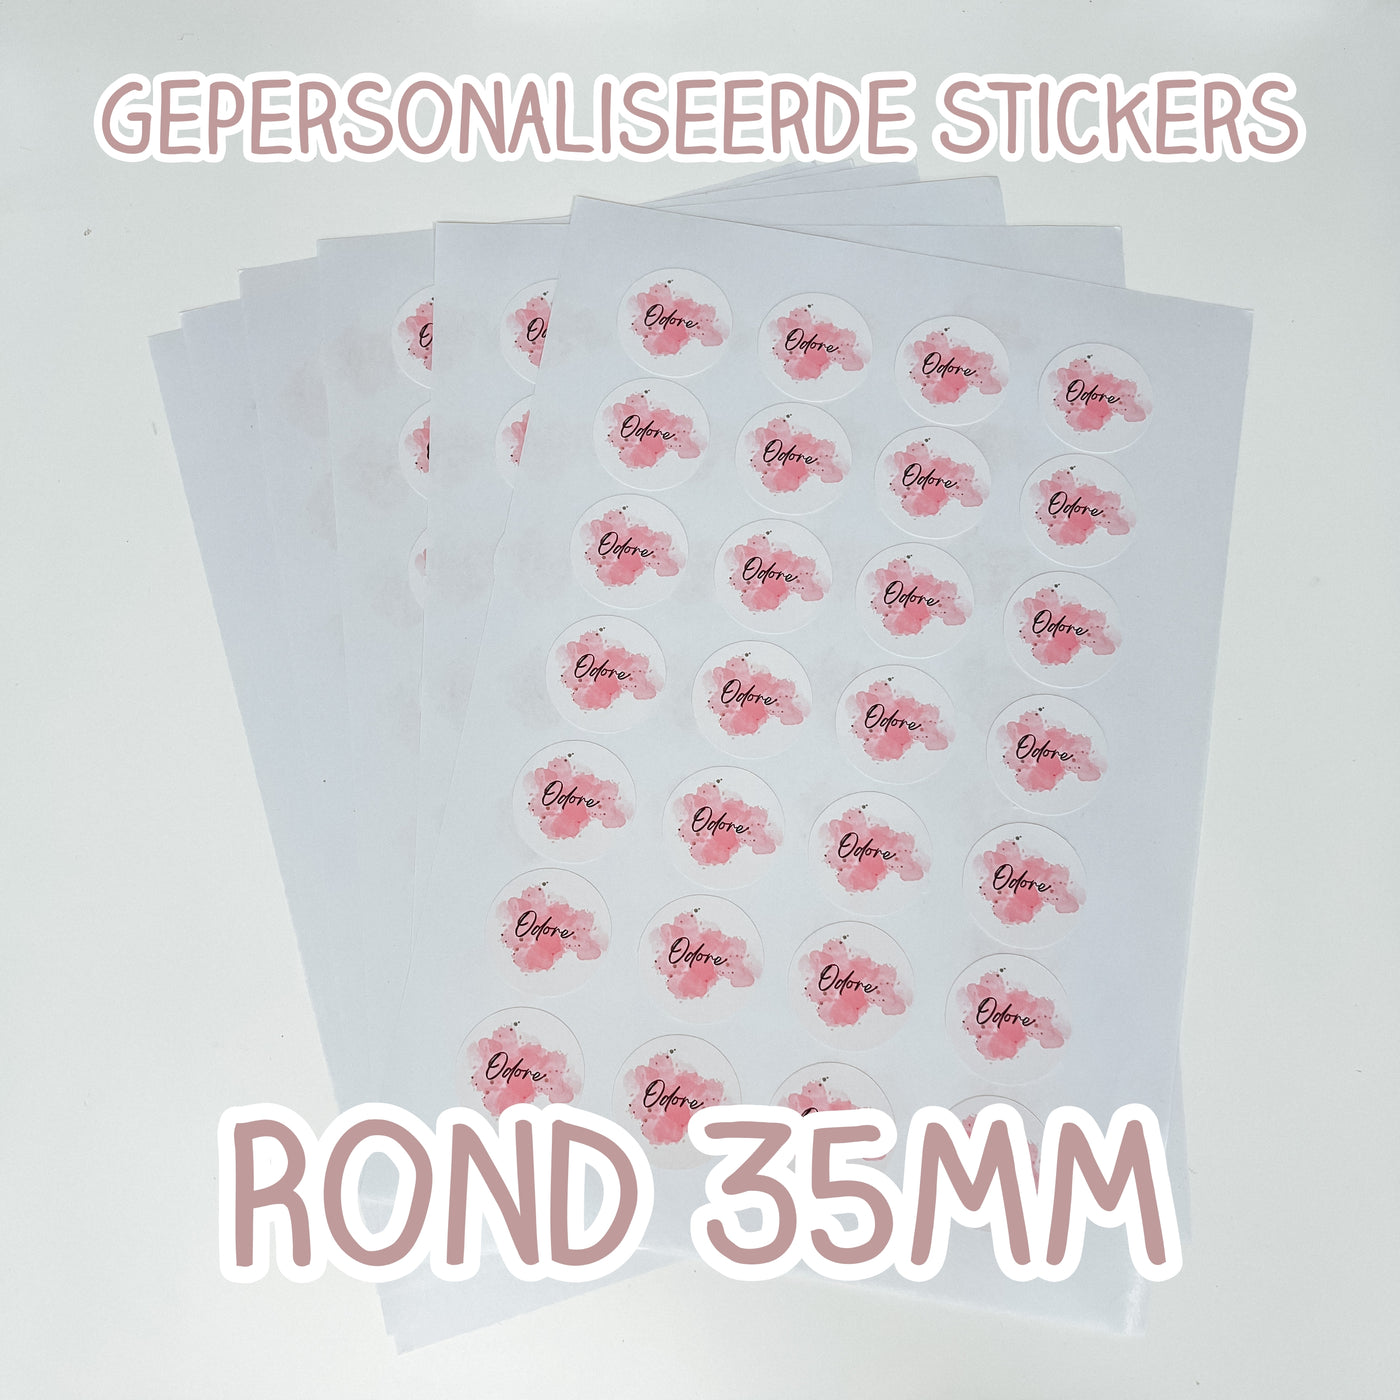 Gepersonaliseerde Stickers - Rond 35mm